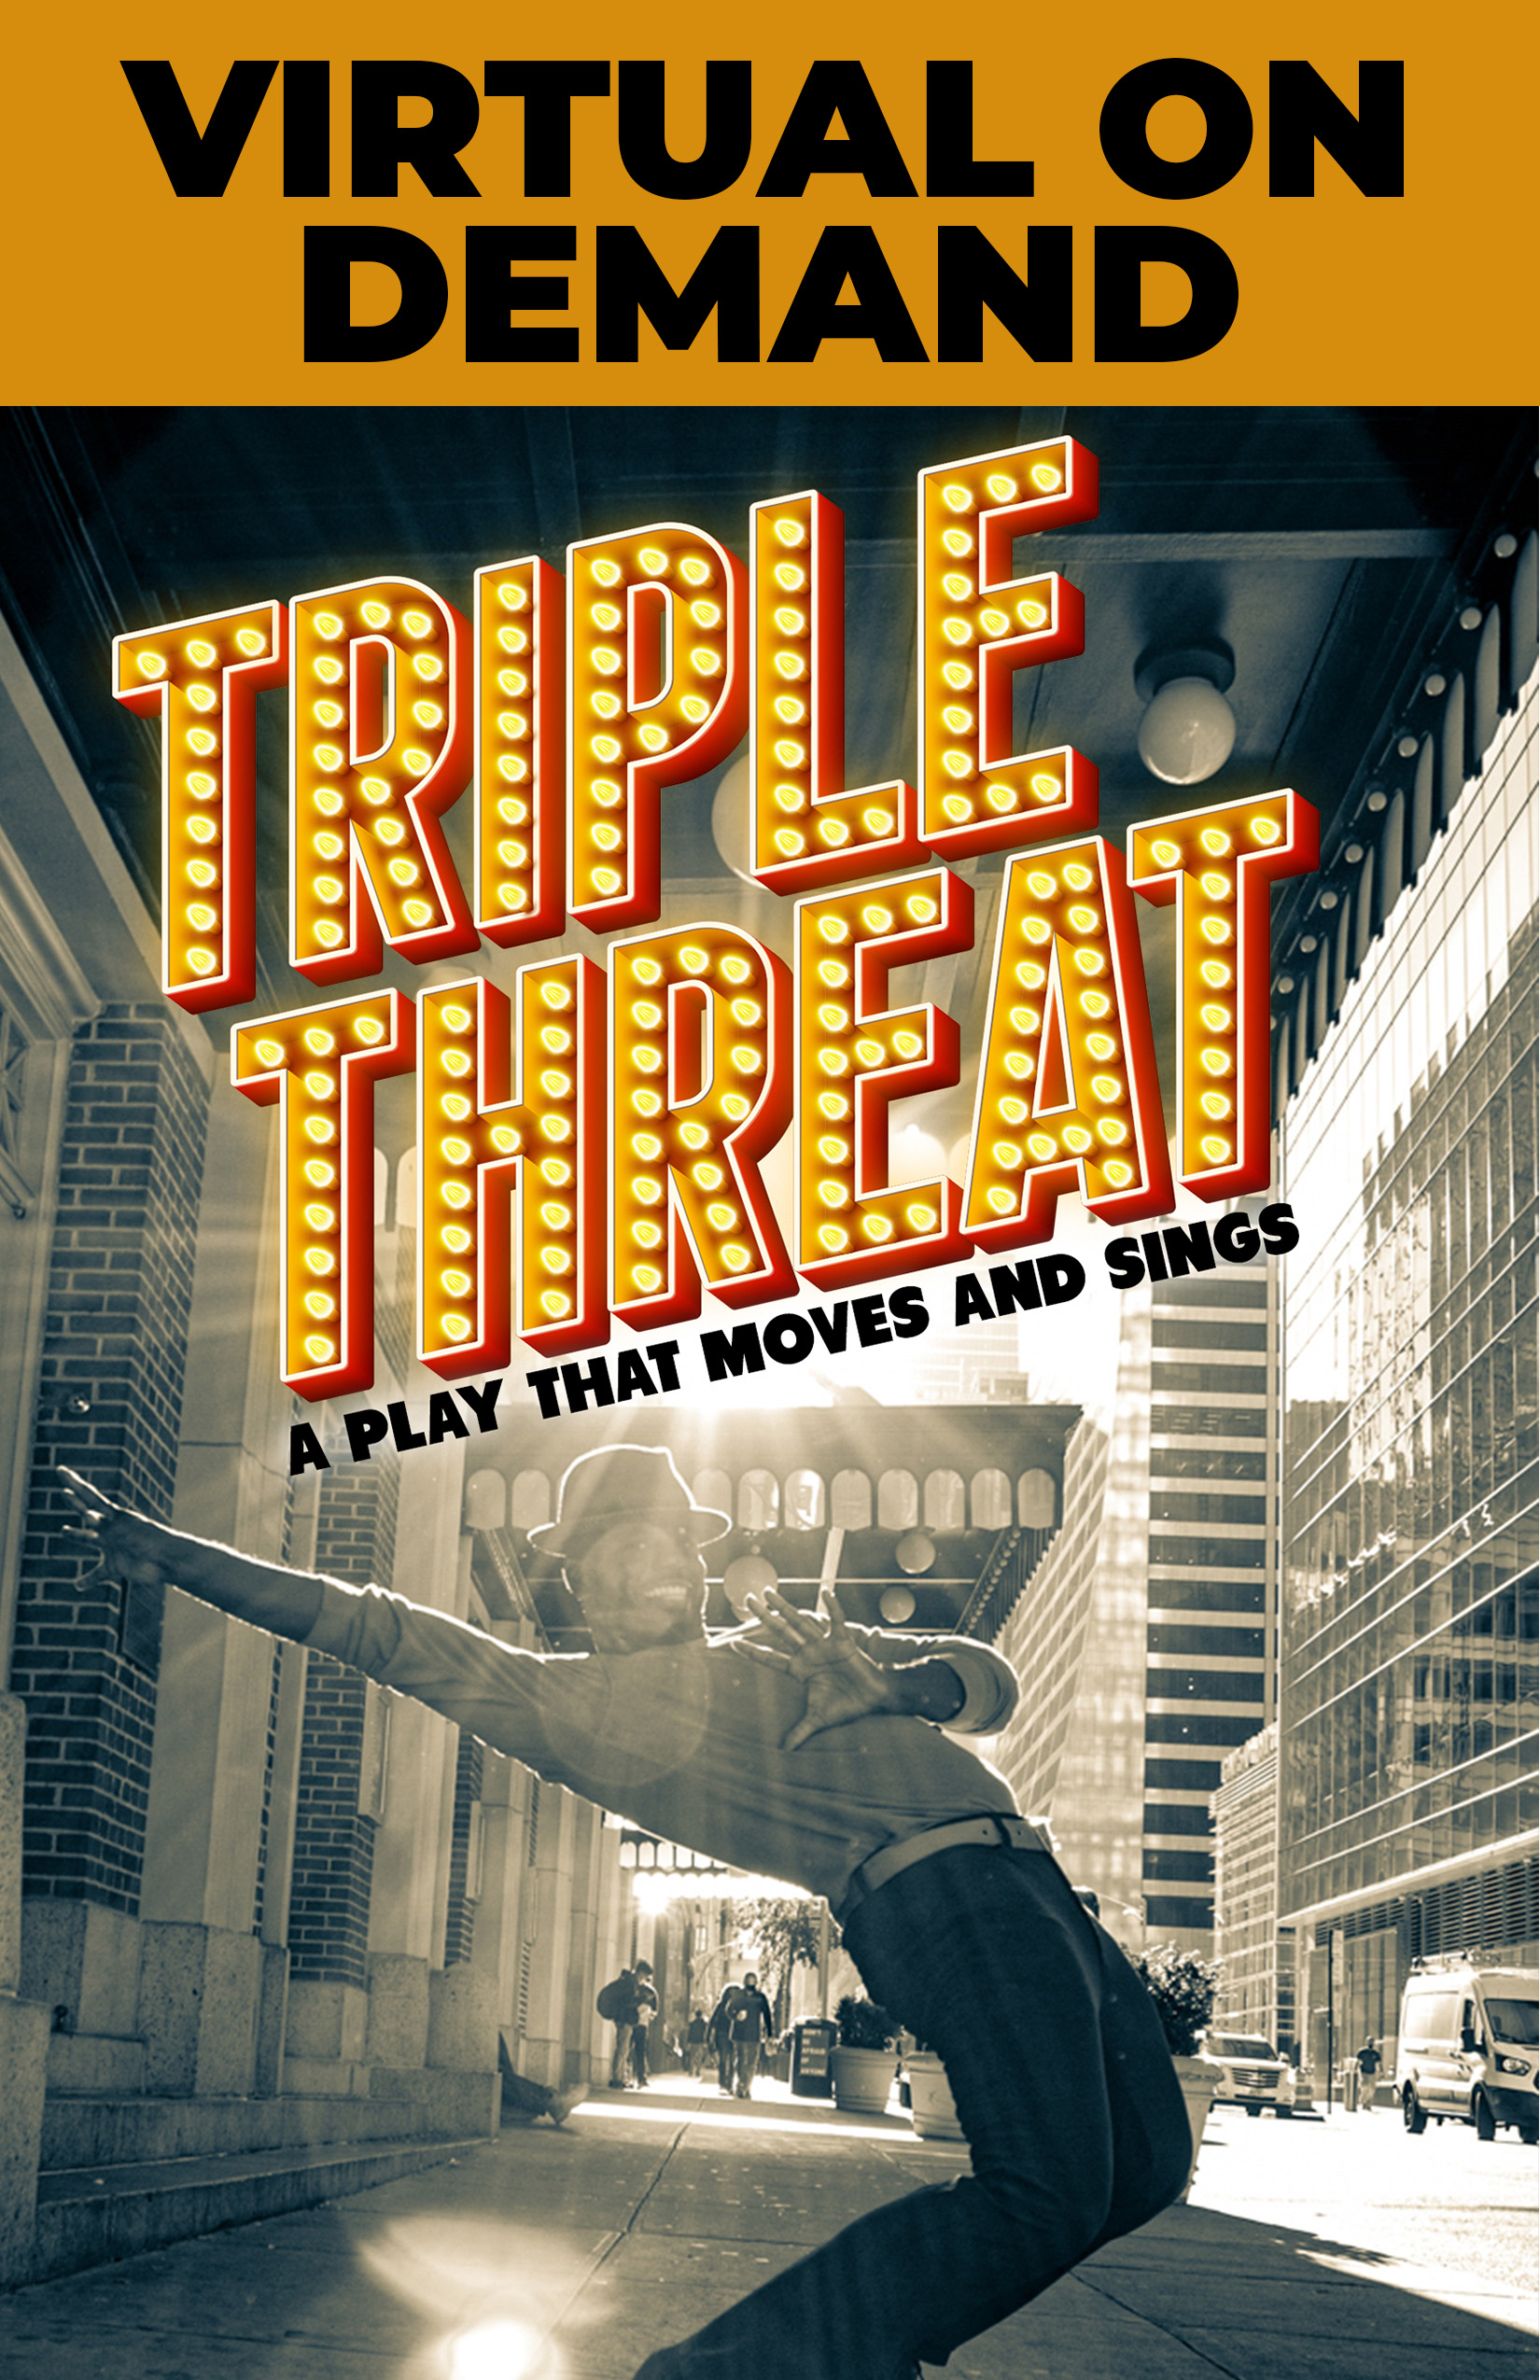 Triple Threat - Zeiders American Dream Theater